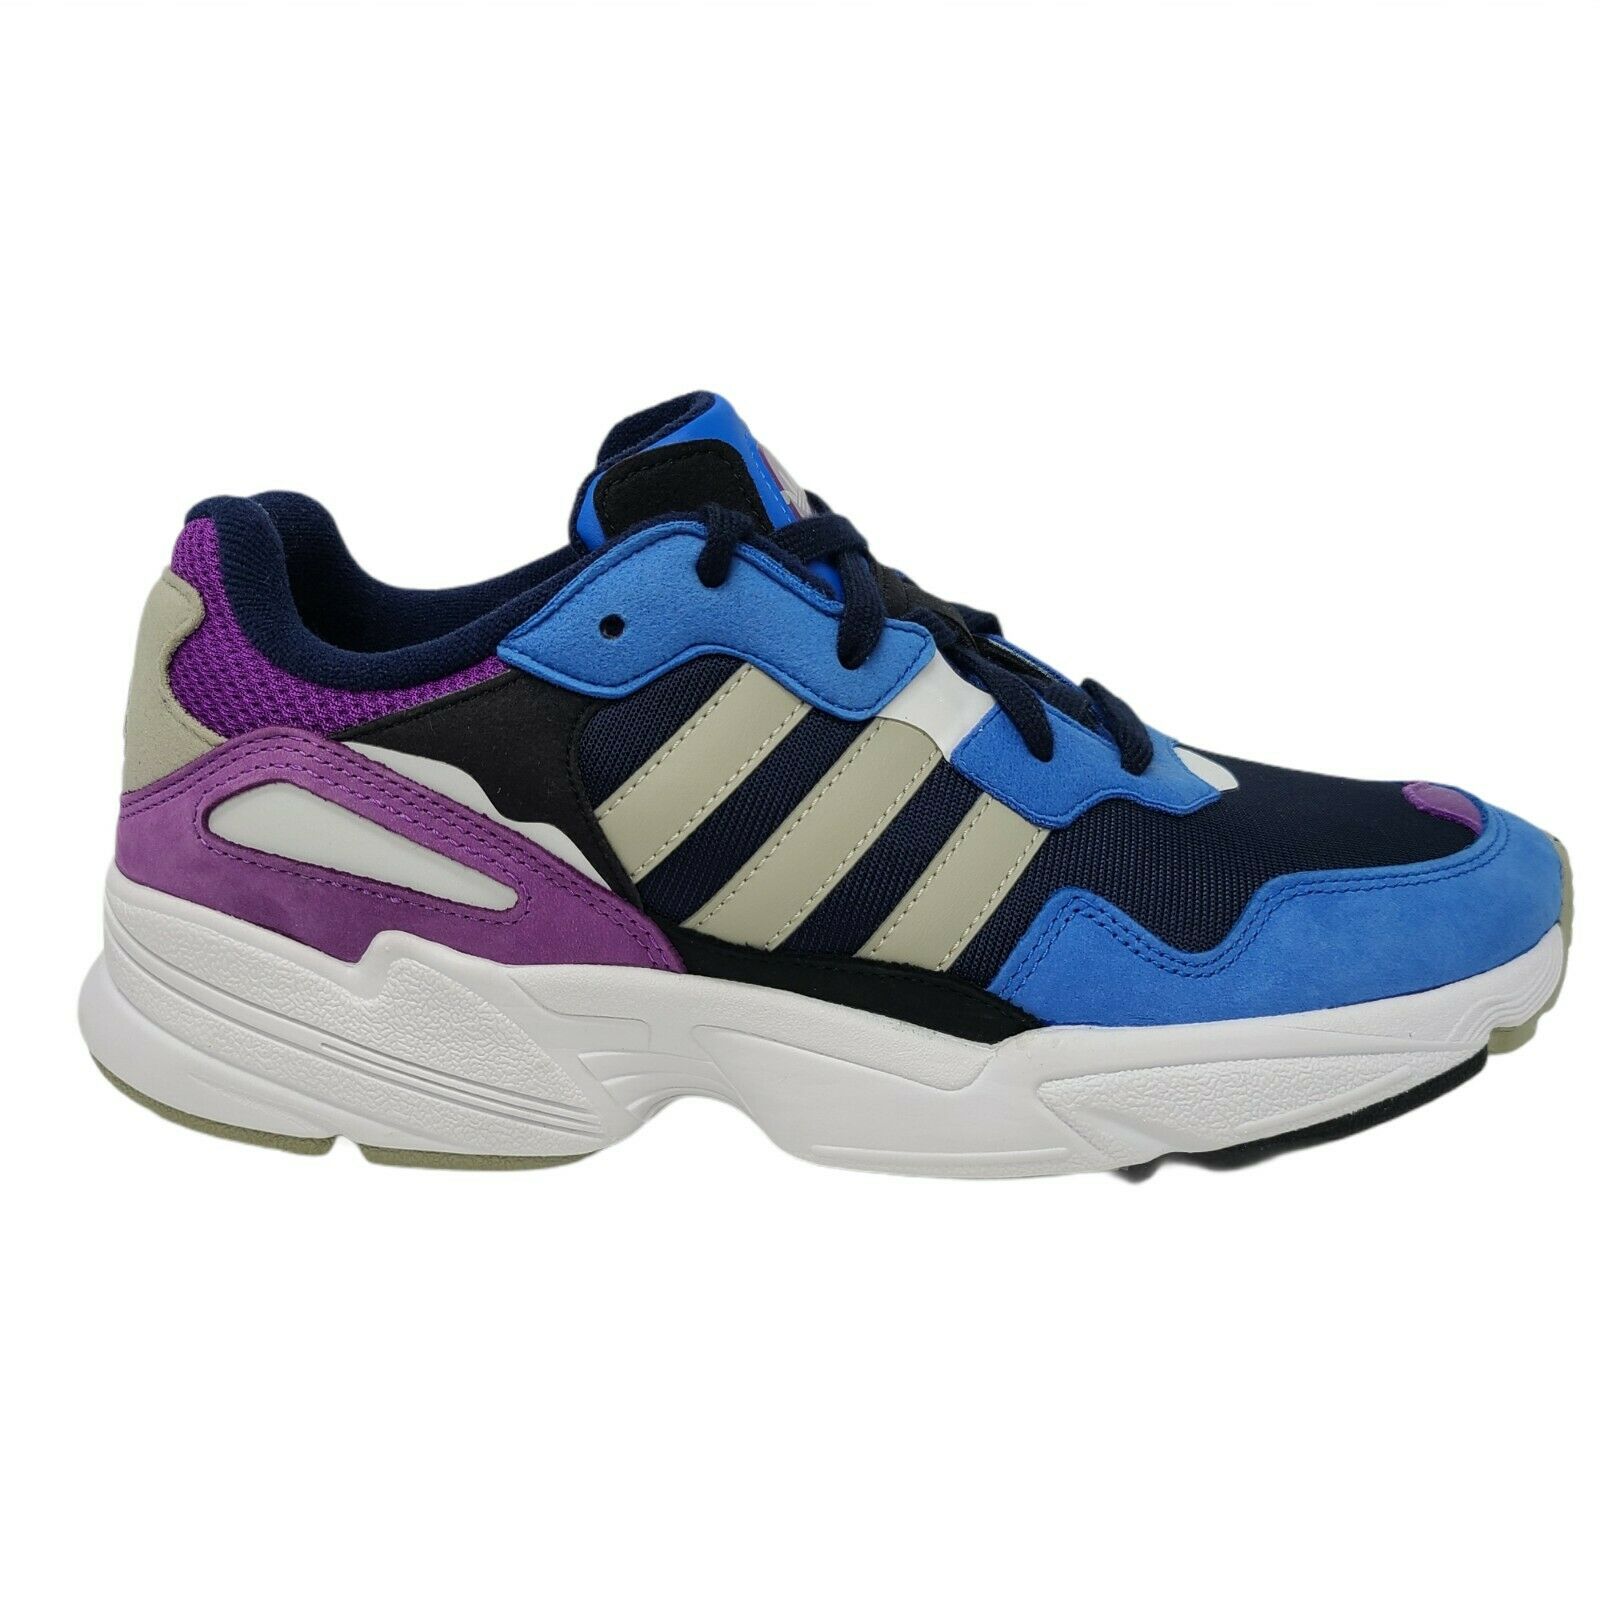 Adidas Yung-96 Blue Purple Black White Men's Shoes Size 8.5 Fashion Athletic